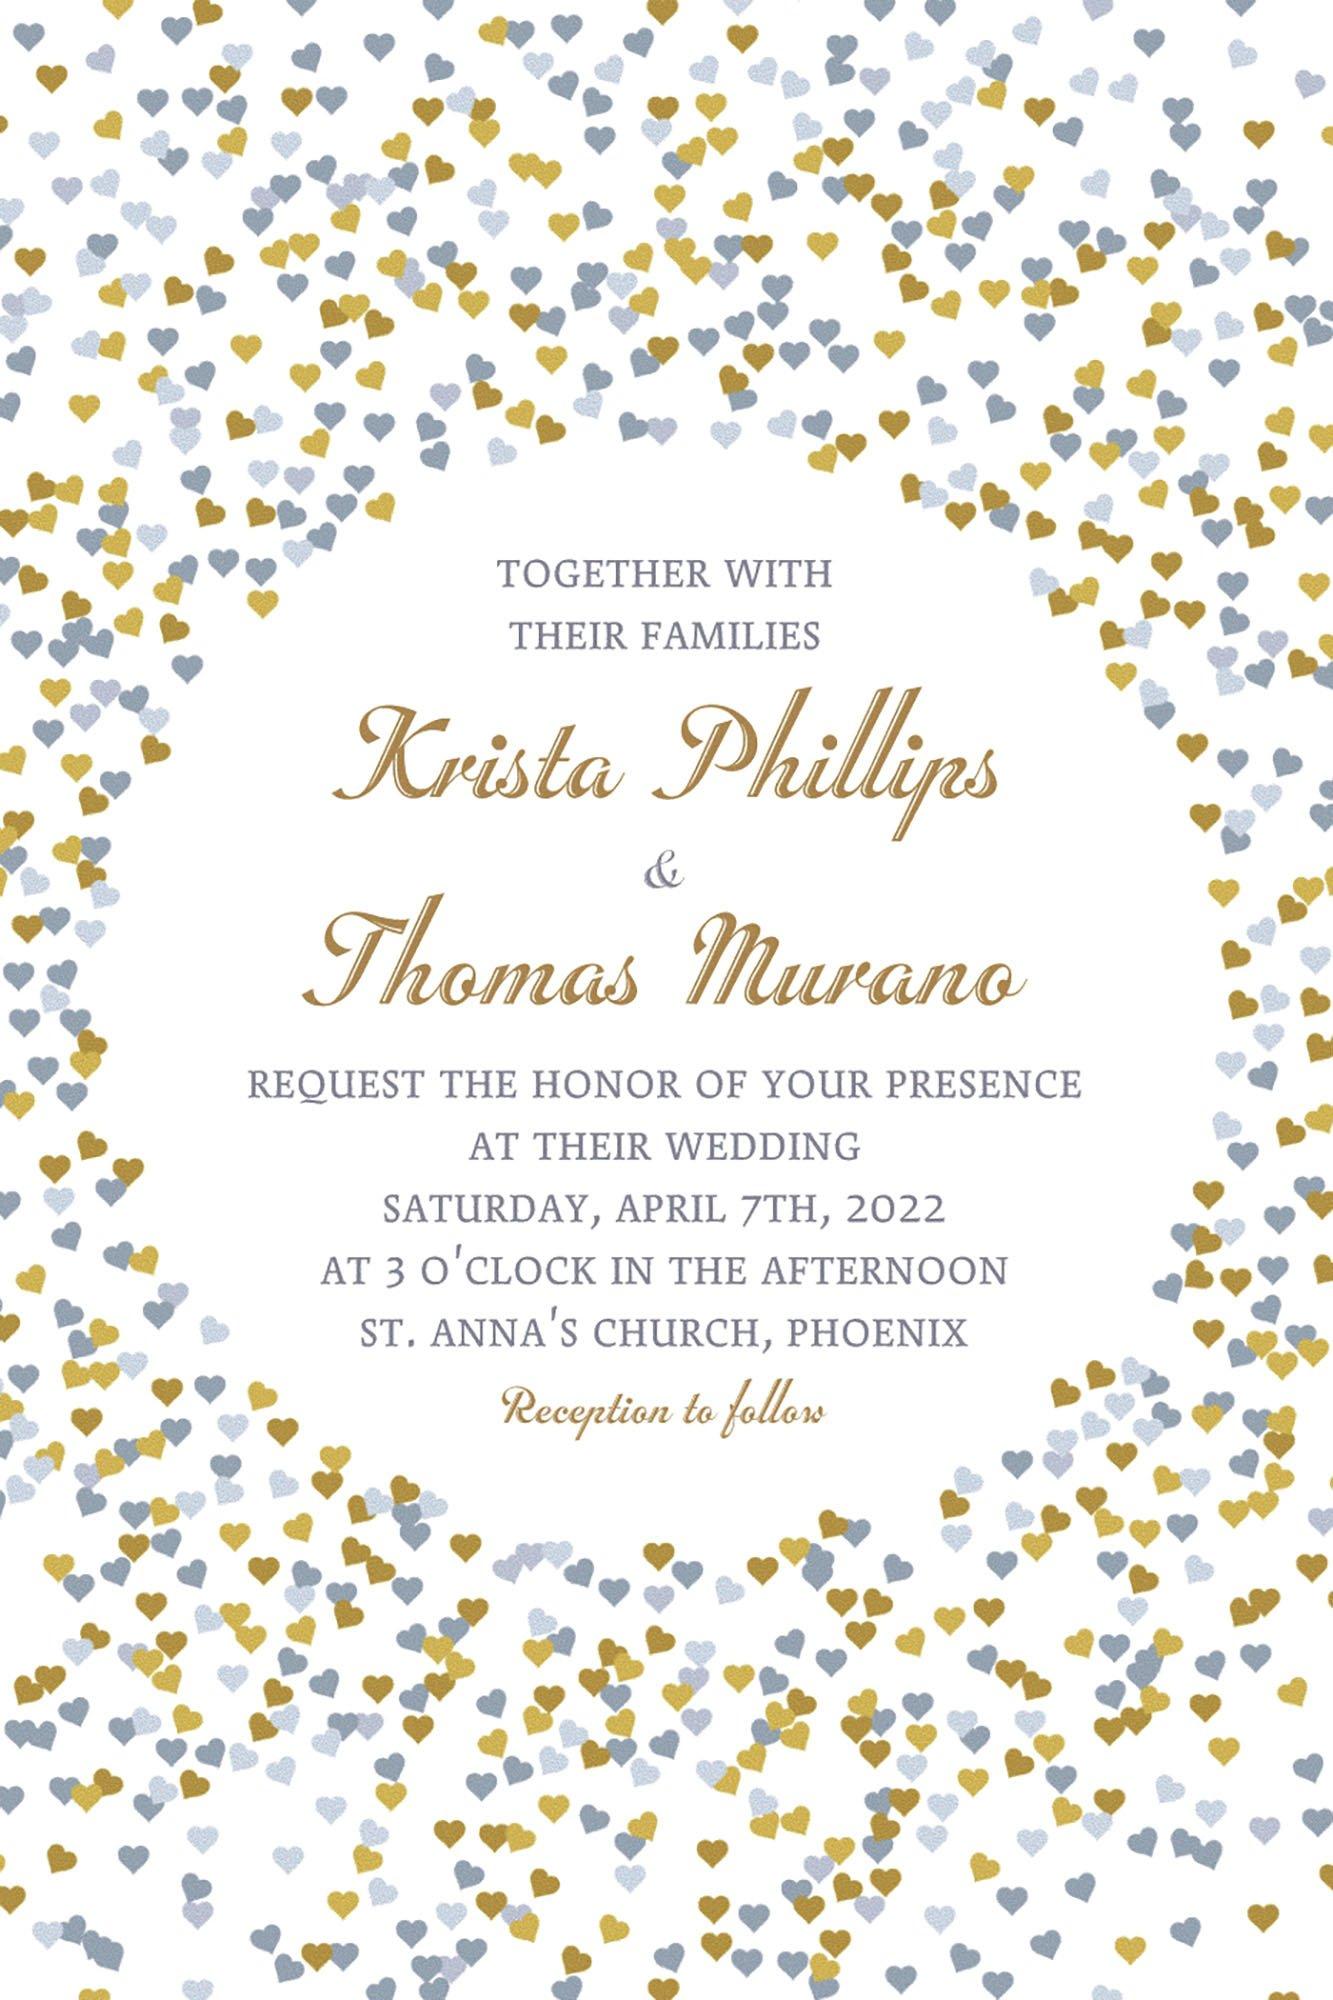 Personalized Paper Confetti Cutouts for Wedding Table